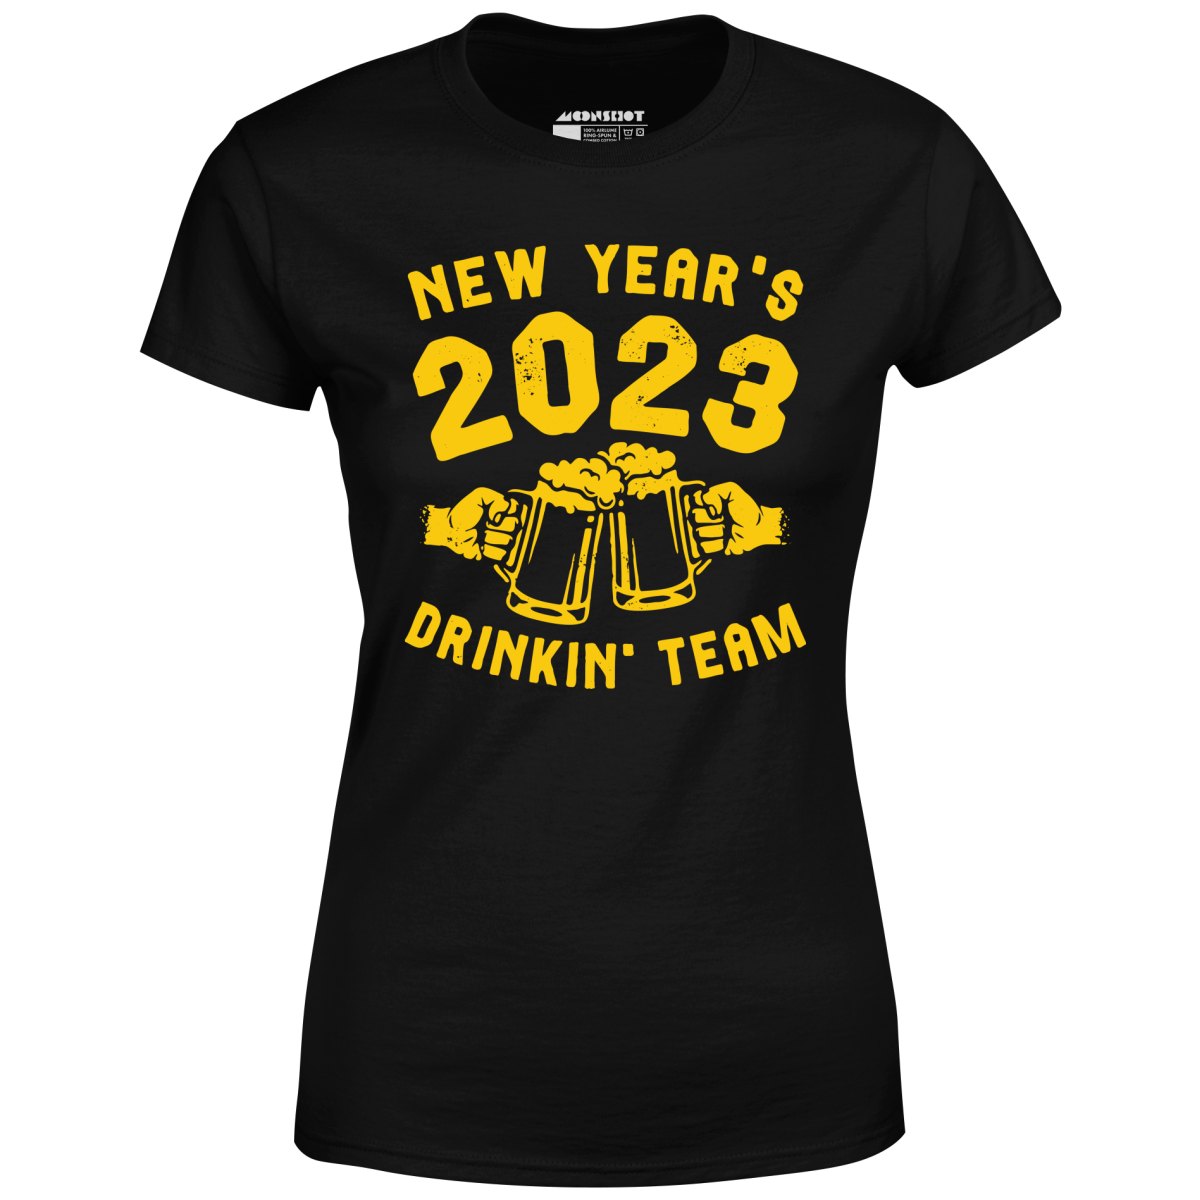 New Year's 2023 Drinkin' Team - Women's T-Shirt